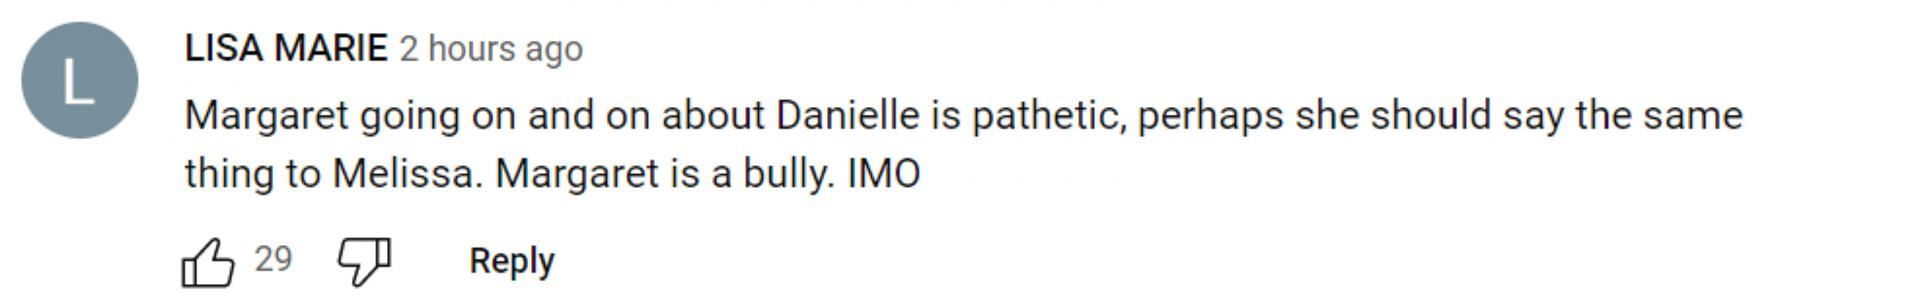 Fans slam Margaret for her comments about Danielle on RHONJ (Image via YouTube)